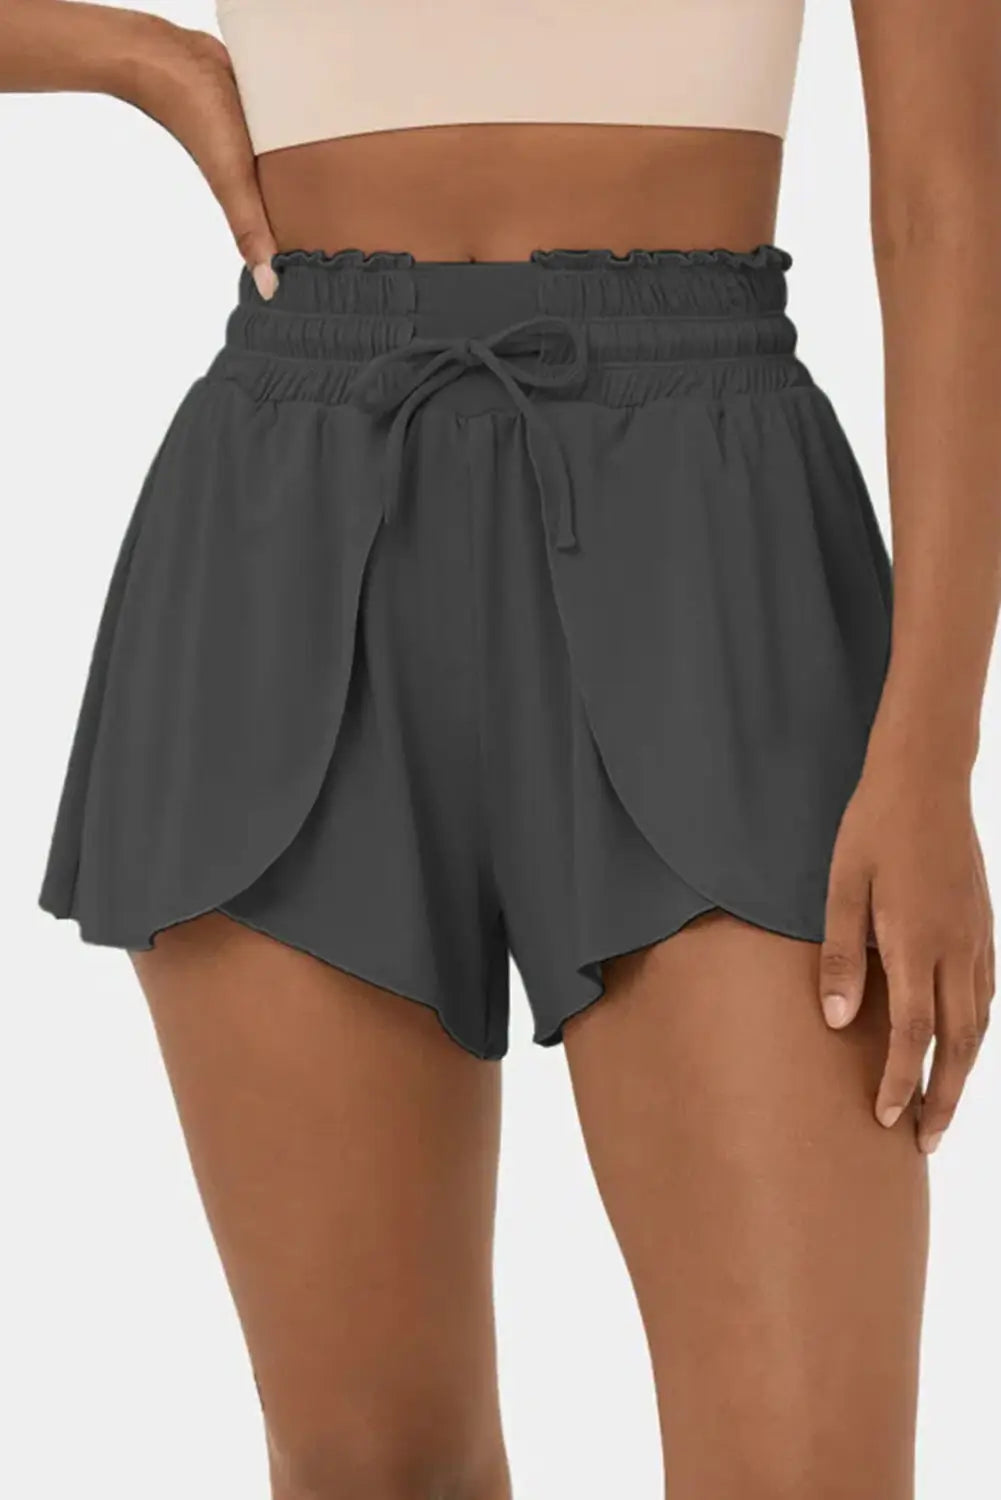 Petal swim shorts -black frilly high waist - dark grey / s / 82% polyamide + 18% elastane - bottoms